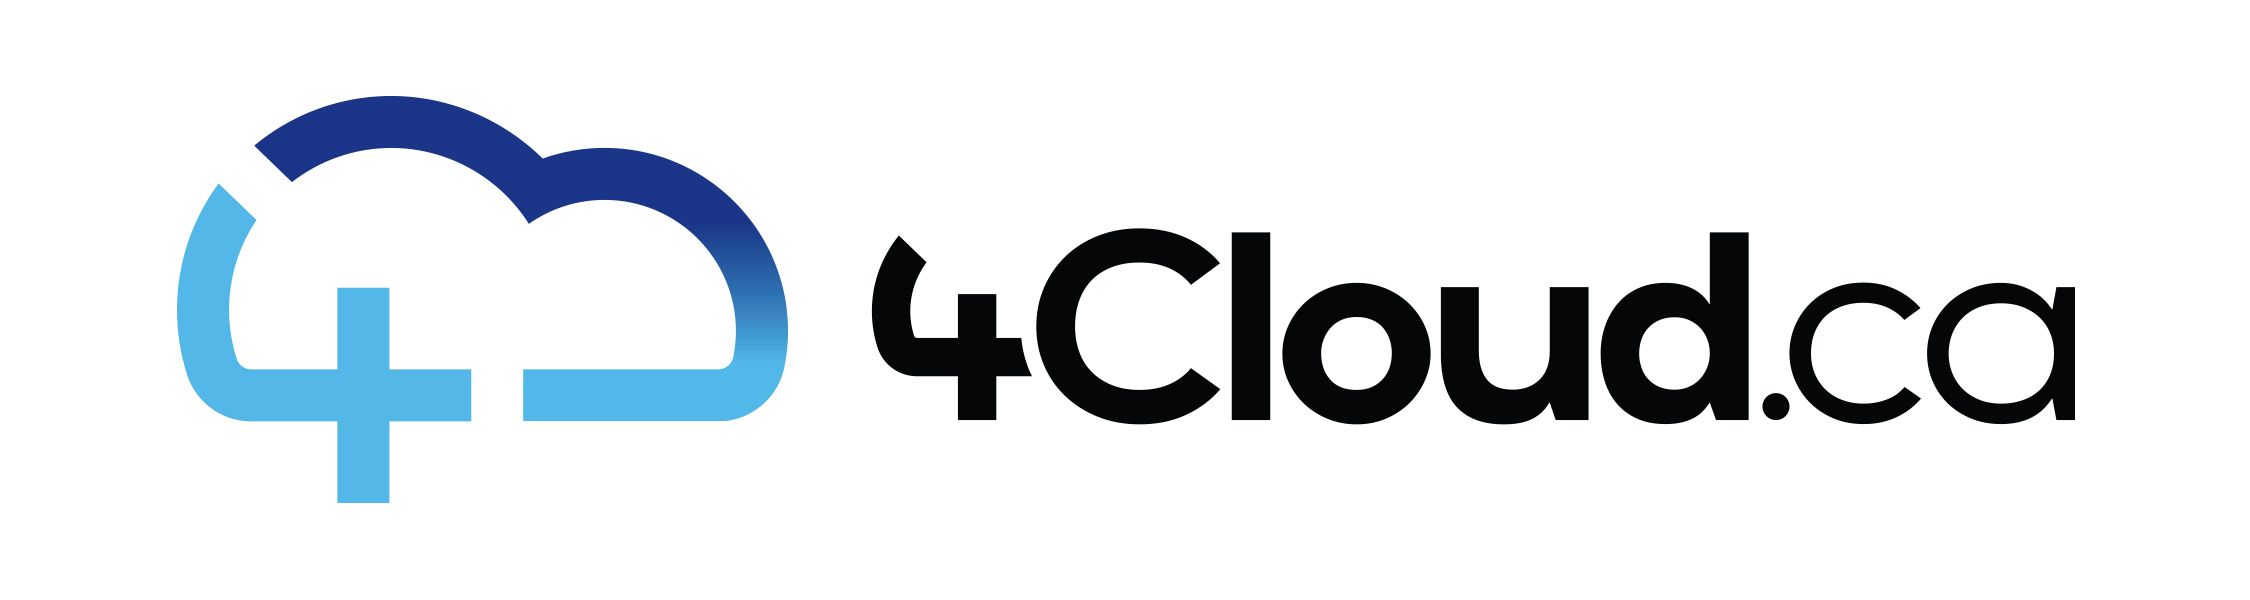 4cloud.ca_logo.jpg